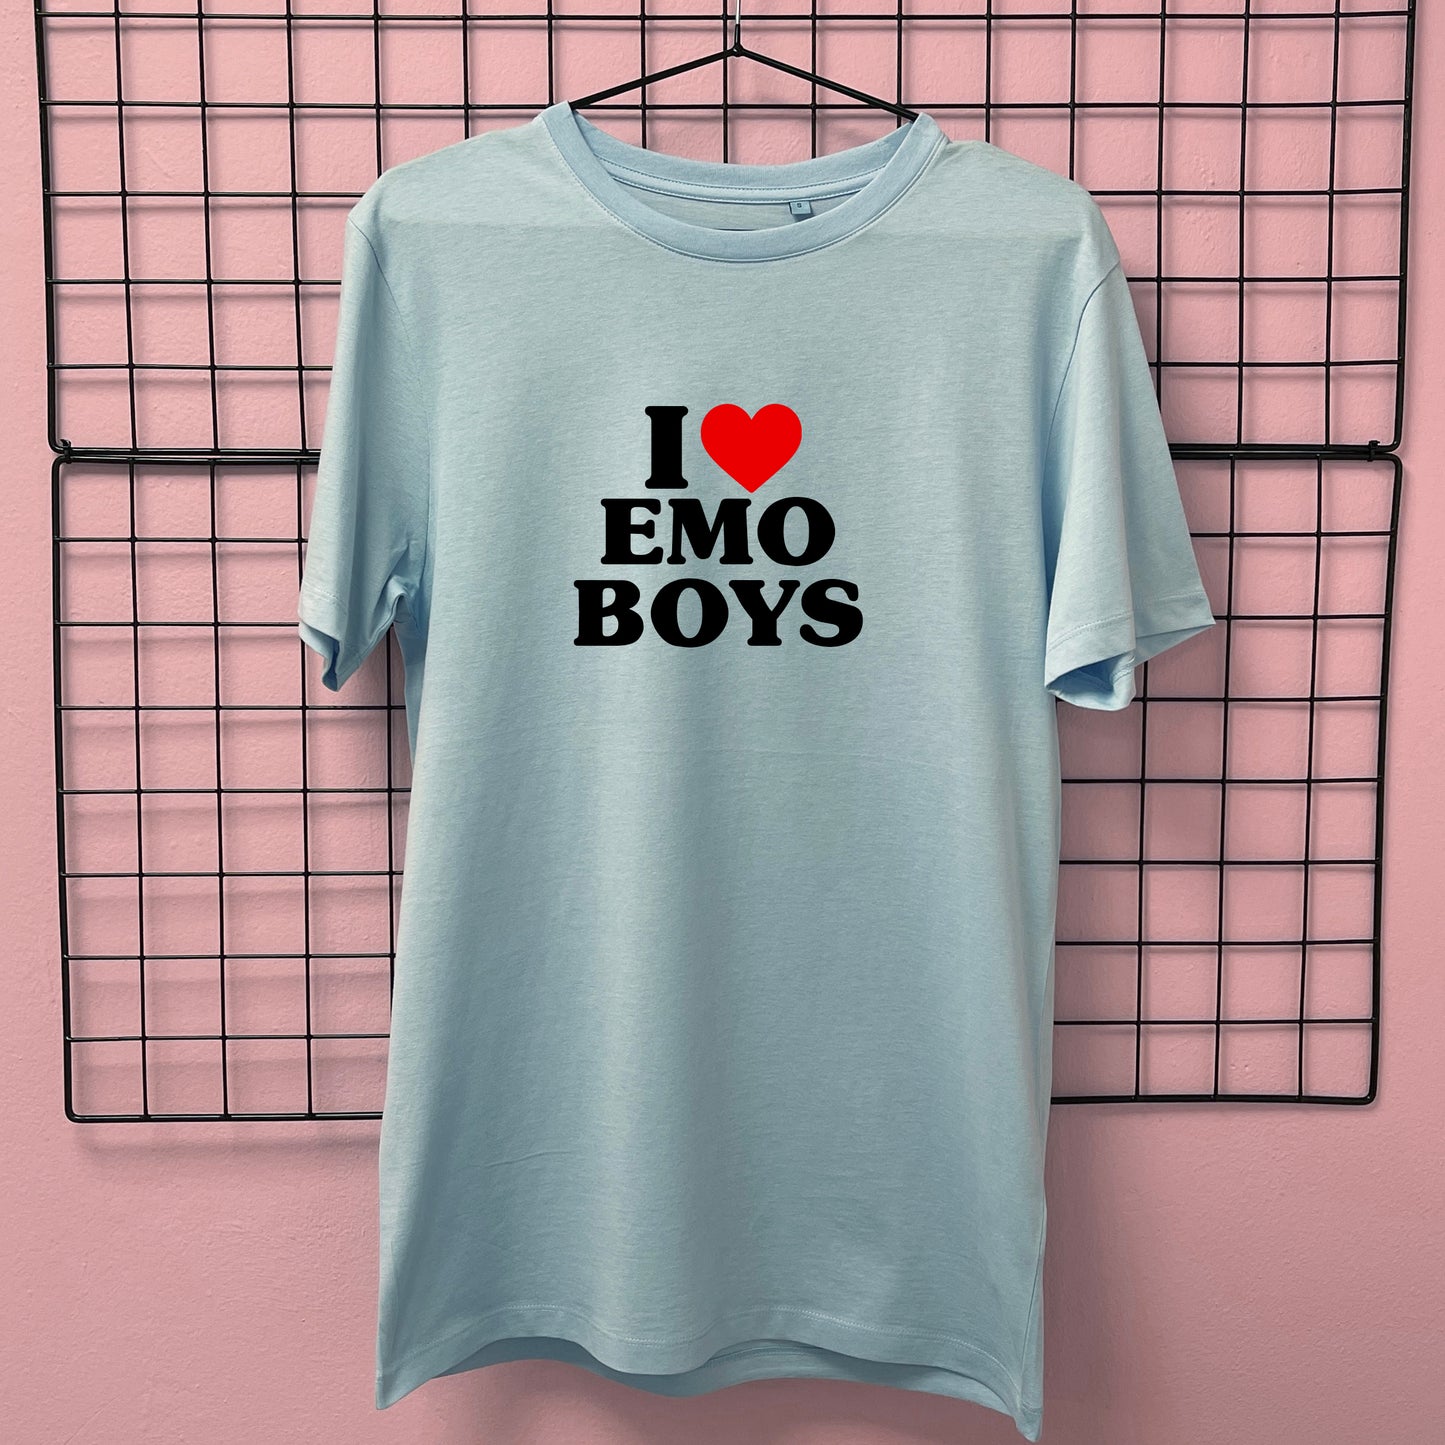 I LOVE TO EMO BOYS HEART T-SHIRT